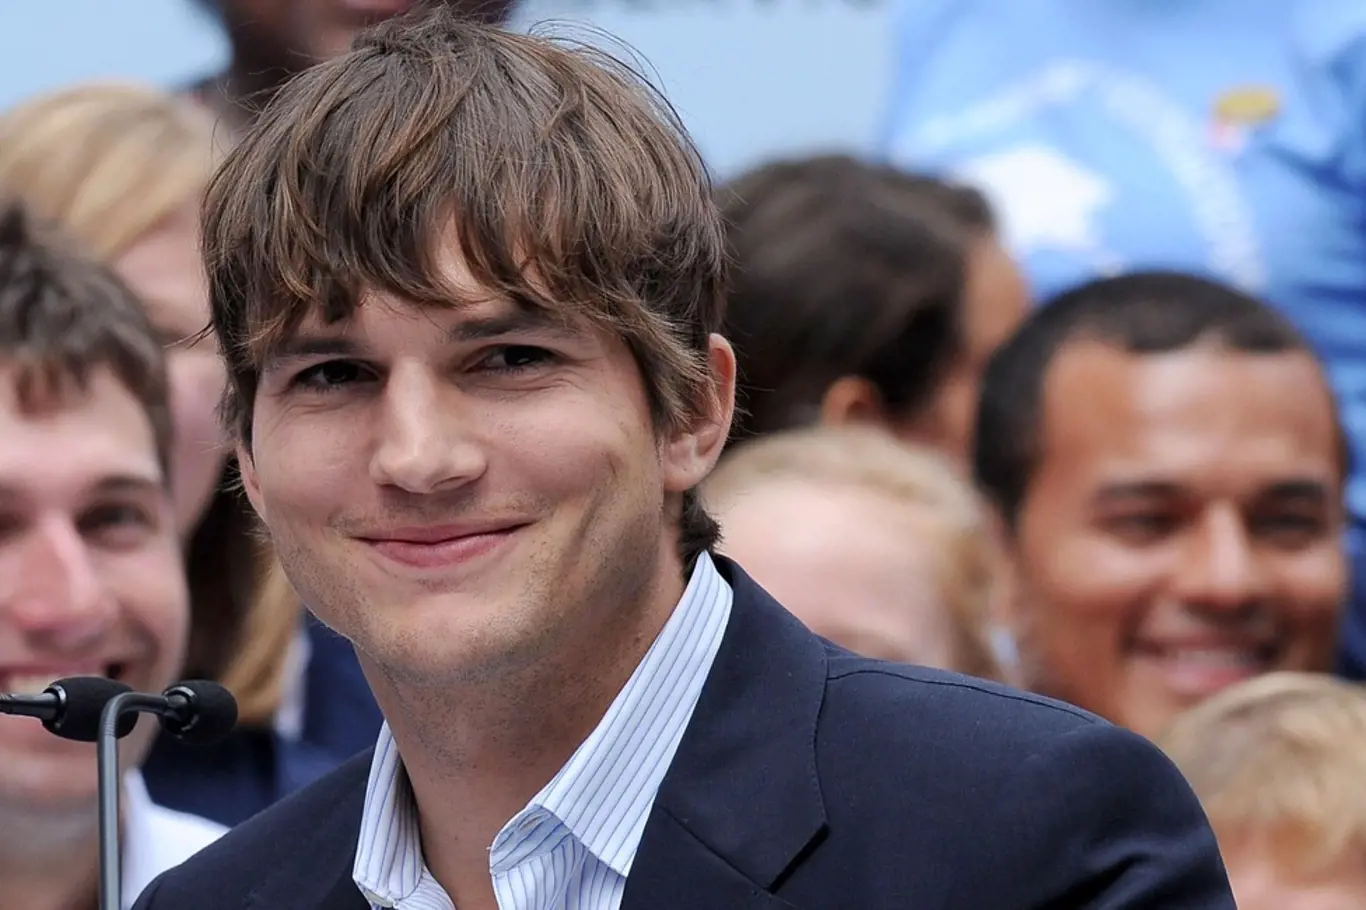 Úspěšný herec i investor Ashton Kutcher.